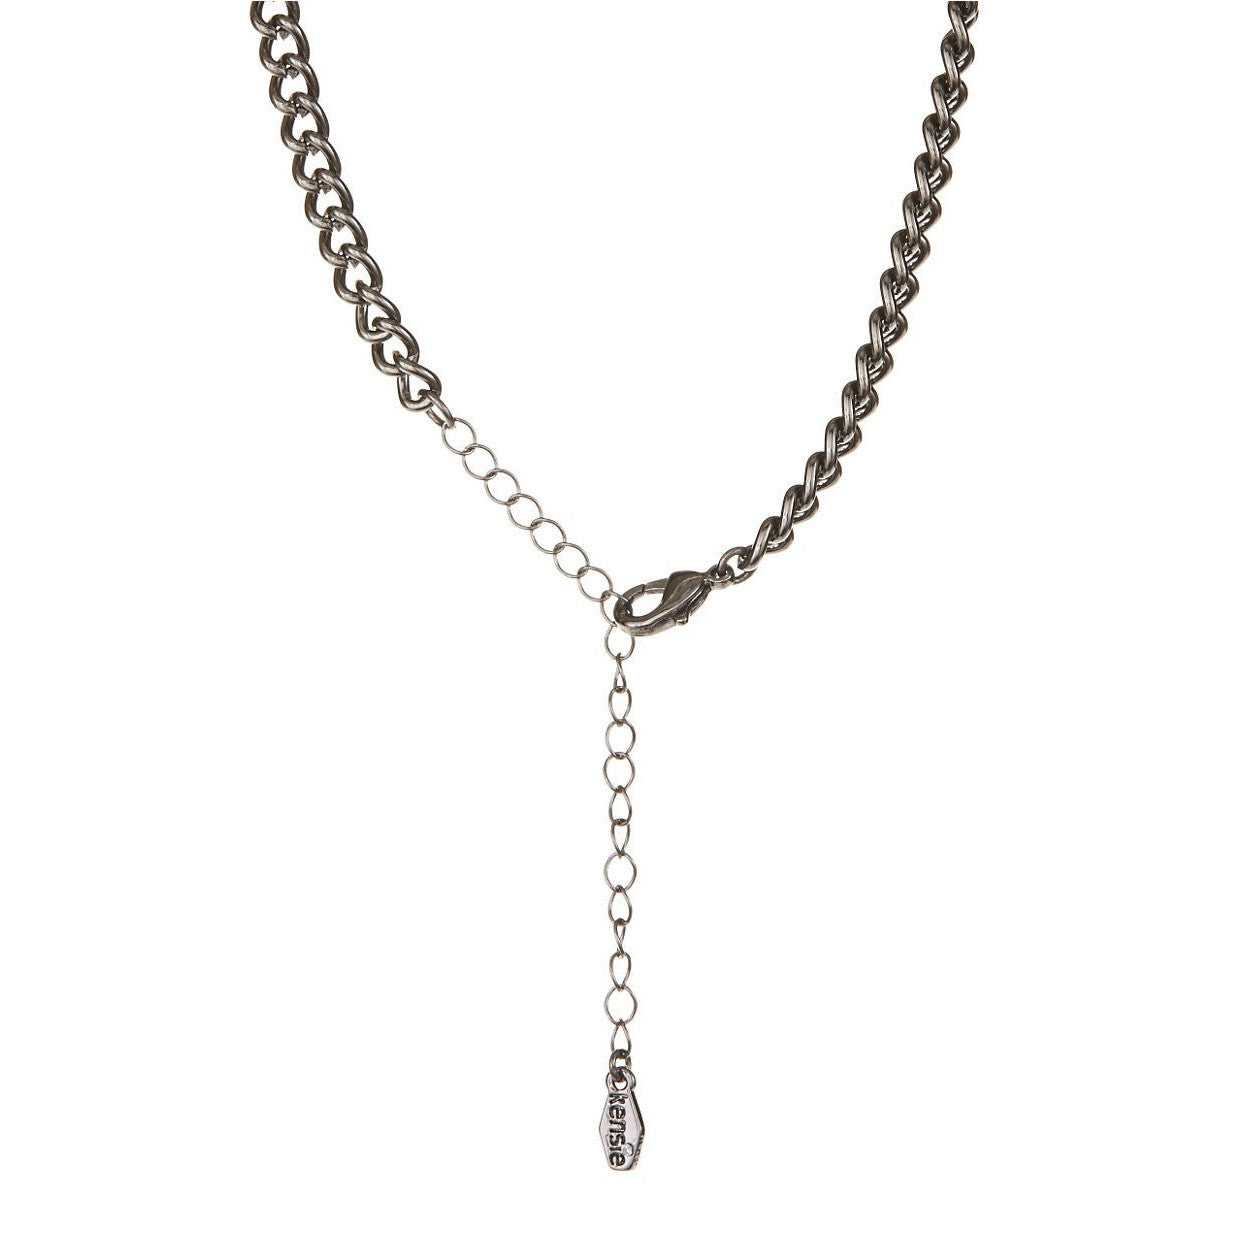 Kensie Silver Rhinestone Chain Necklace Closure